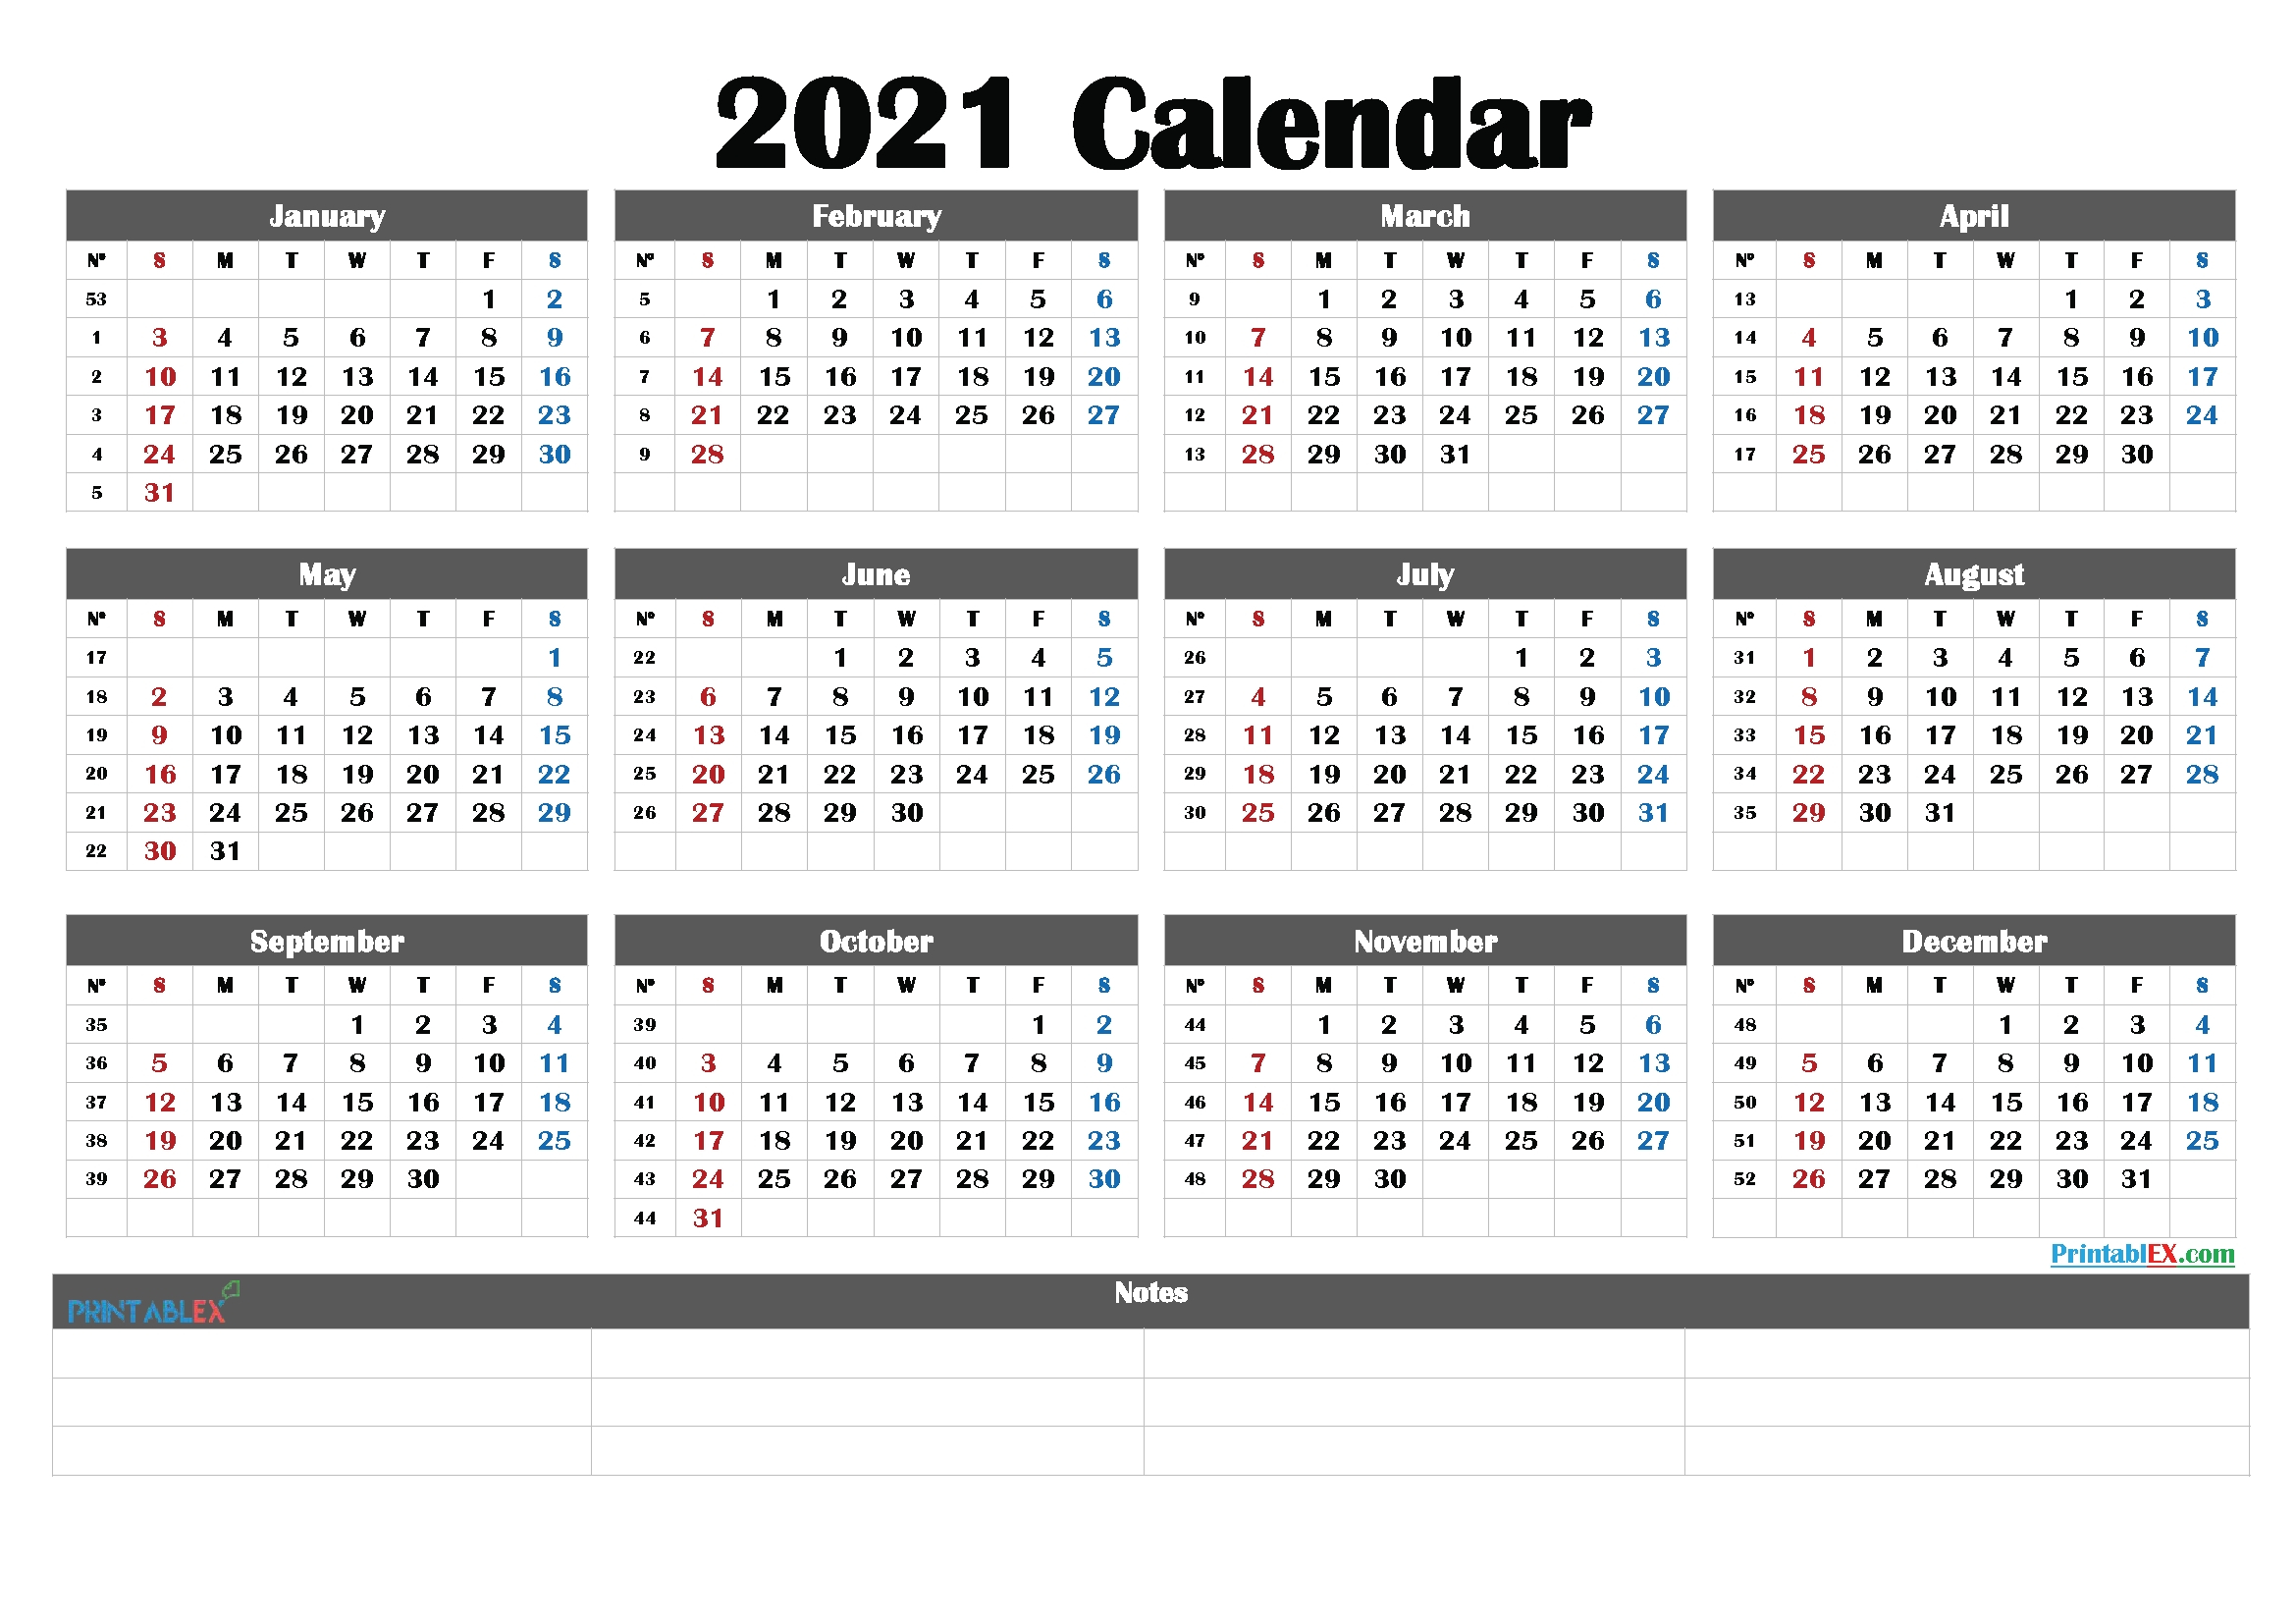 2021 Calendar Weeks Numbered - Template Calendar Design